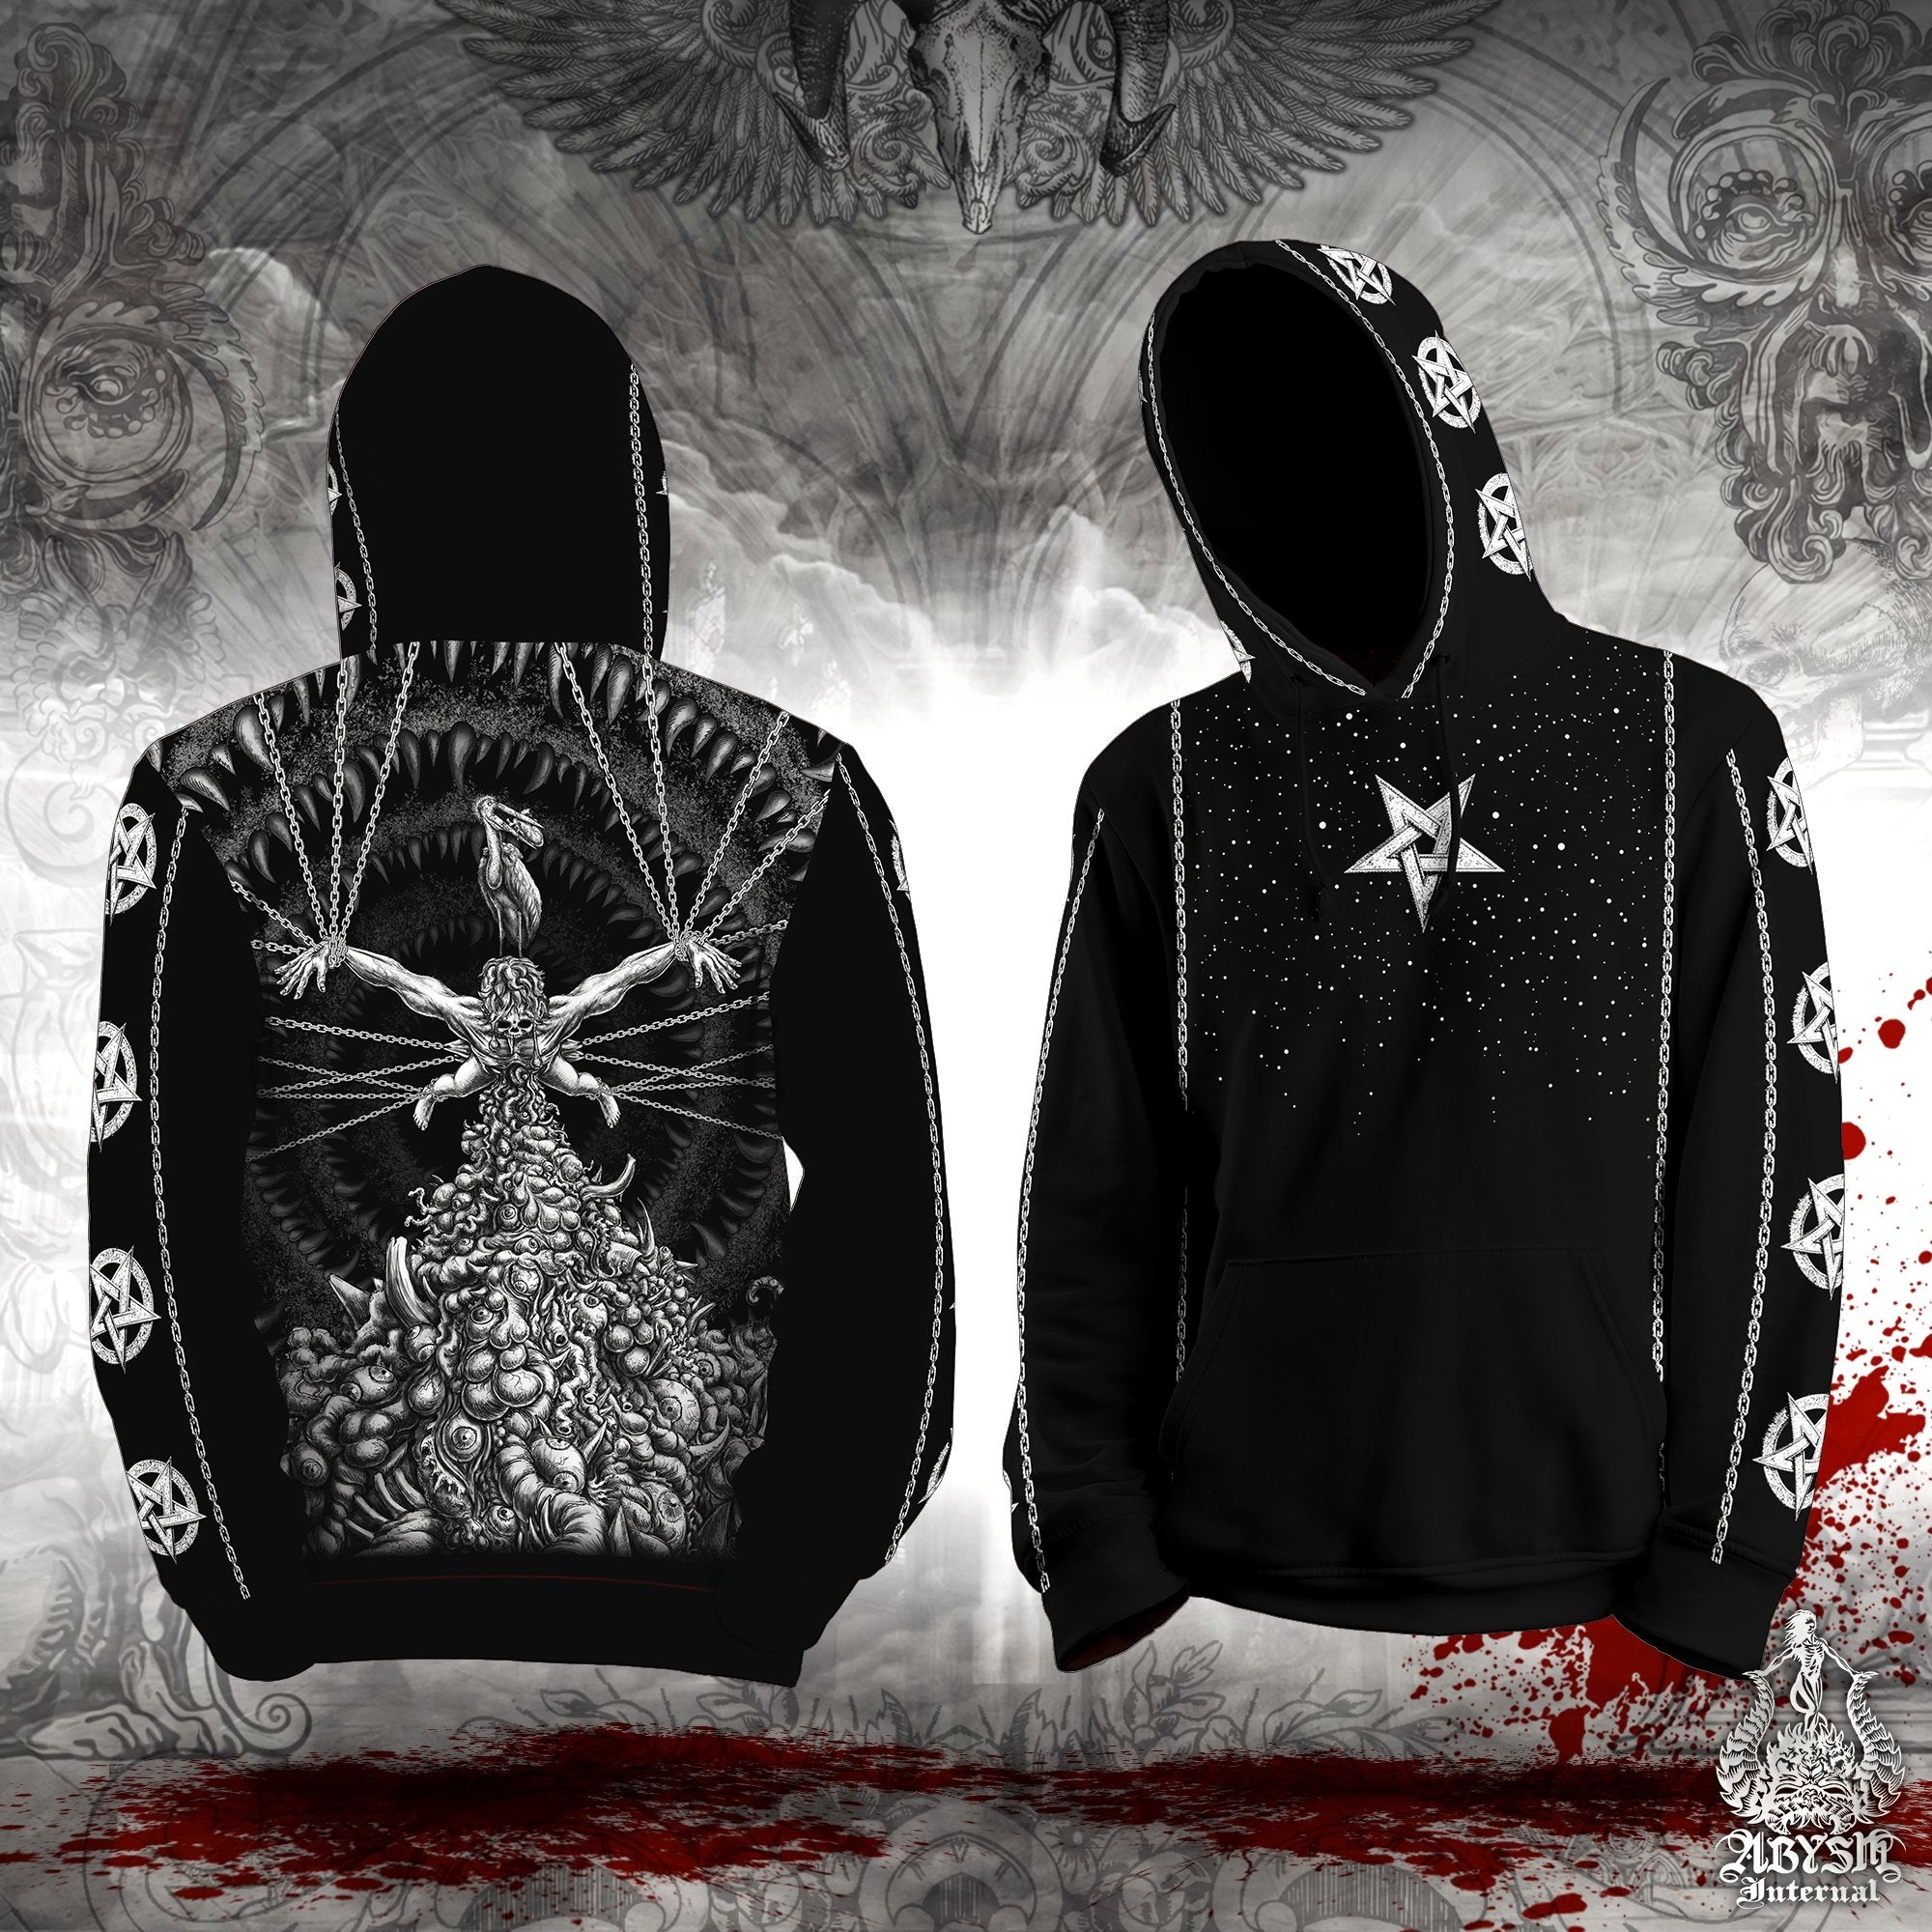 Horror Hoodie, Goth Streetwear, Black Metal, Alternative Clothing, Unisex - Gothic Hell, Purging - Abysm Internal